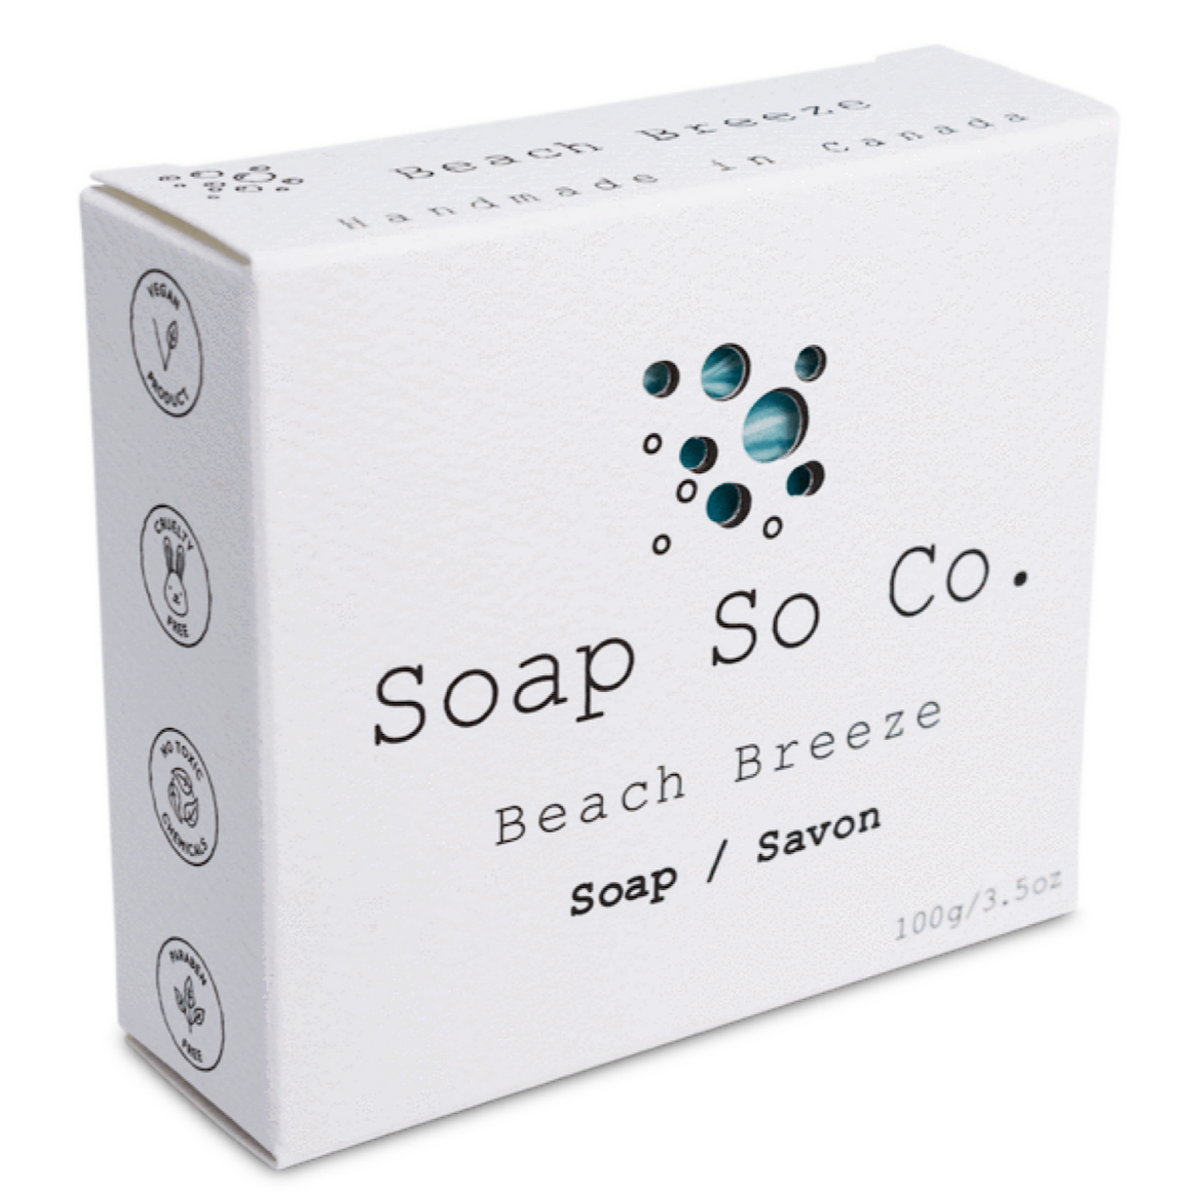 Beach Breeze Bar Soap